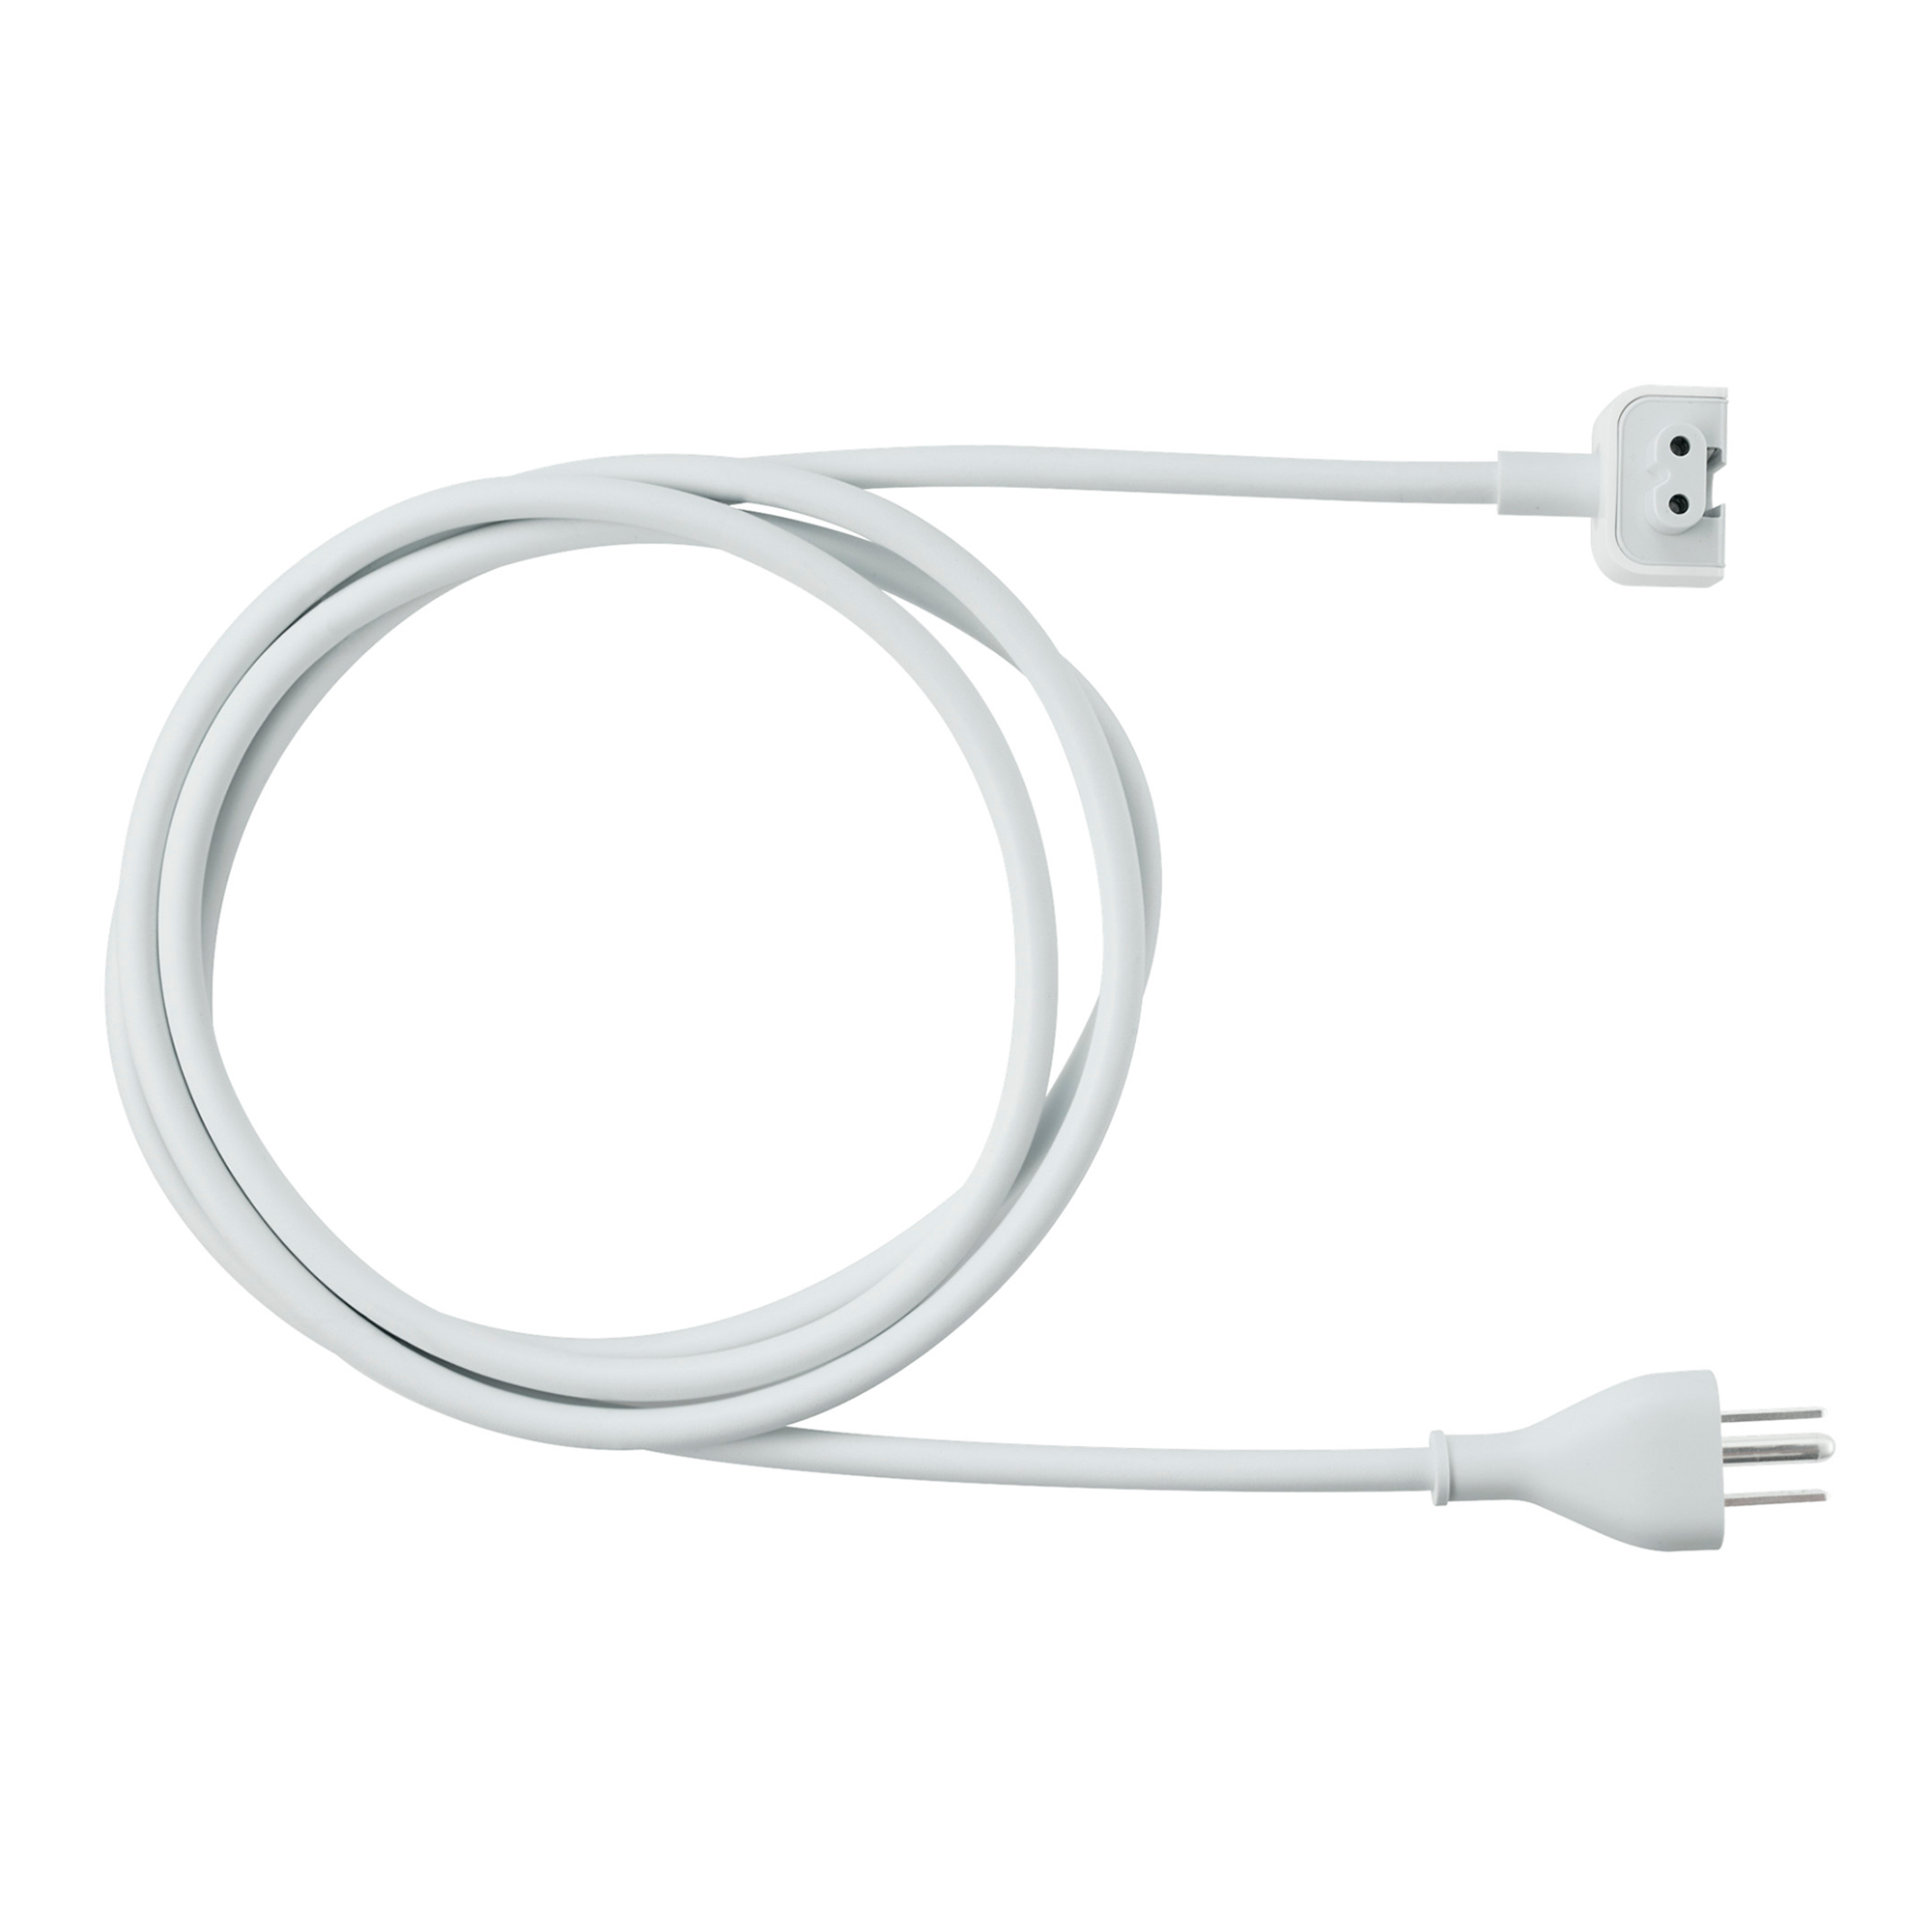 Cable Adaptador De Corriente Para Mac Apple Mk122ll/a 1,8m